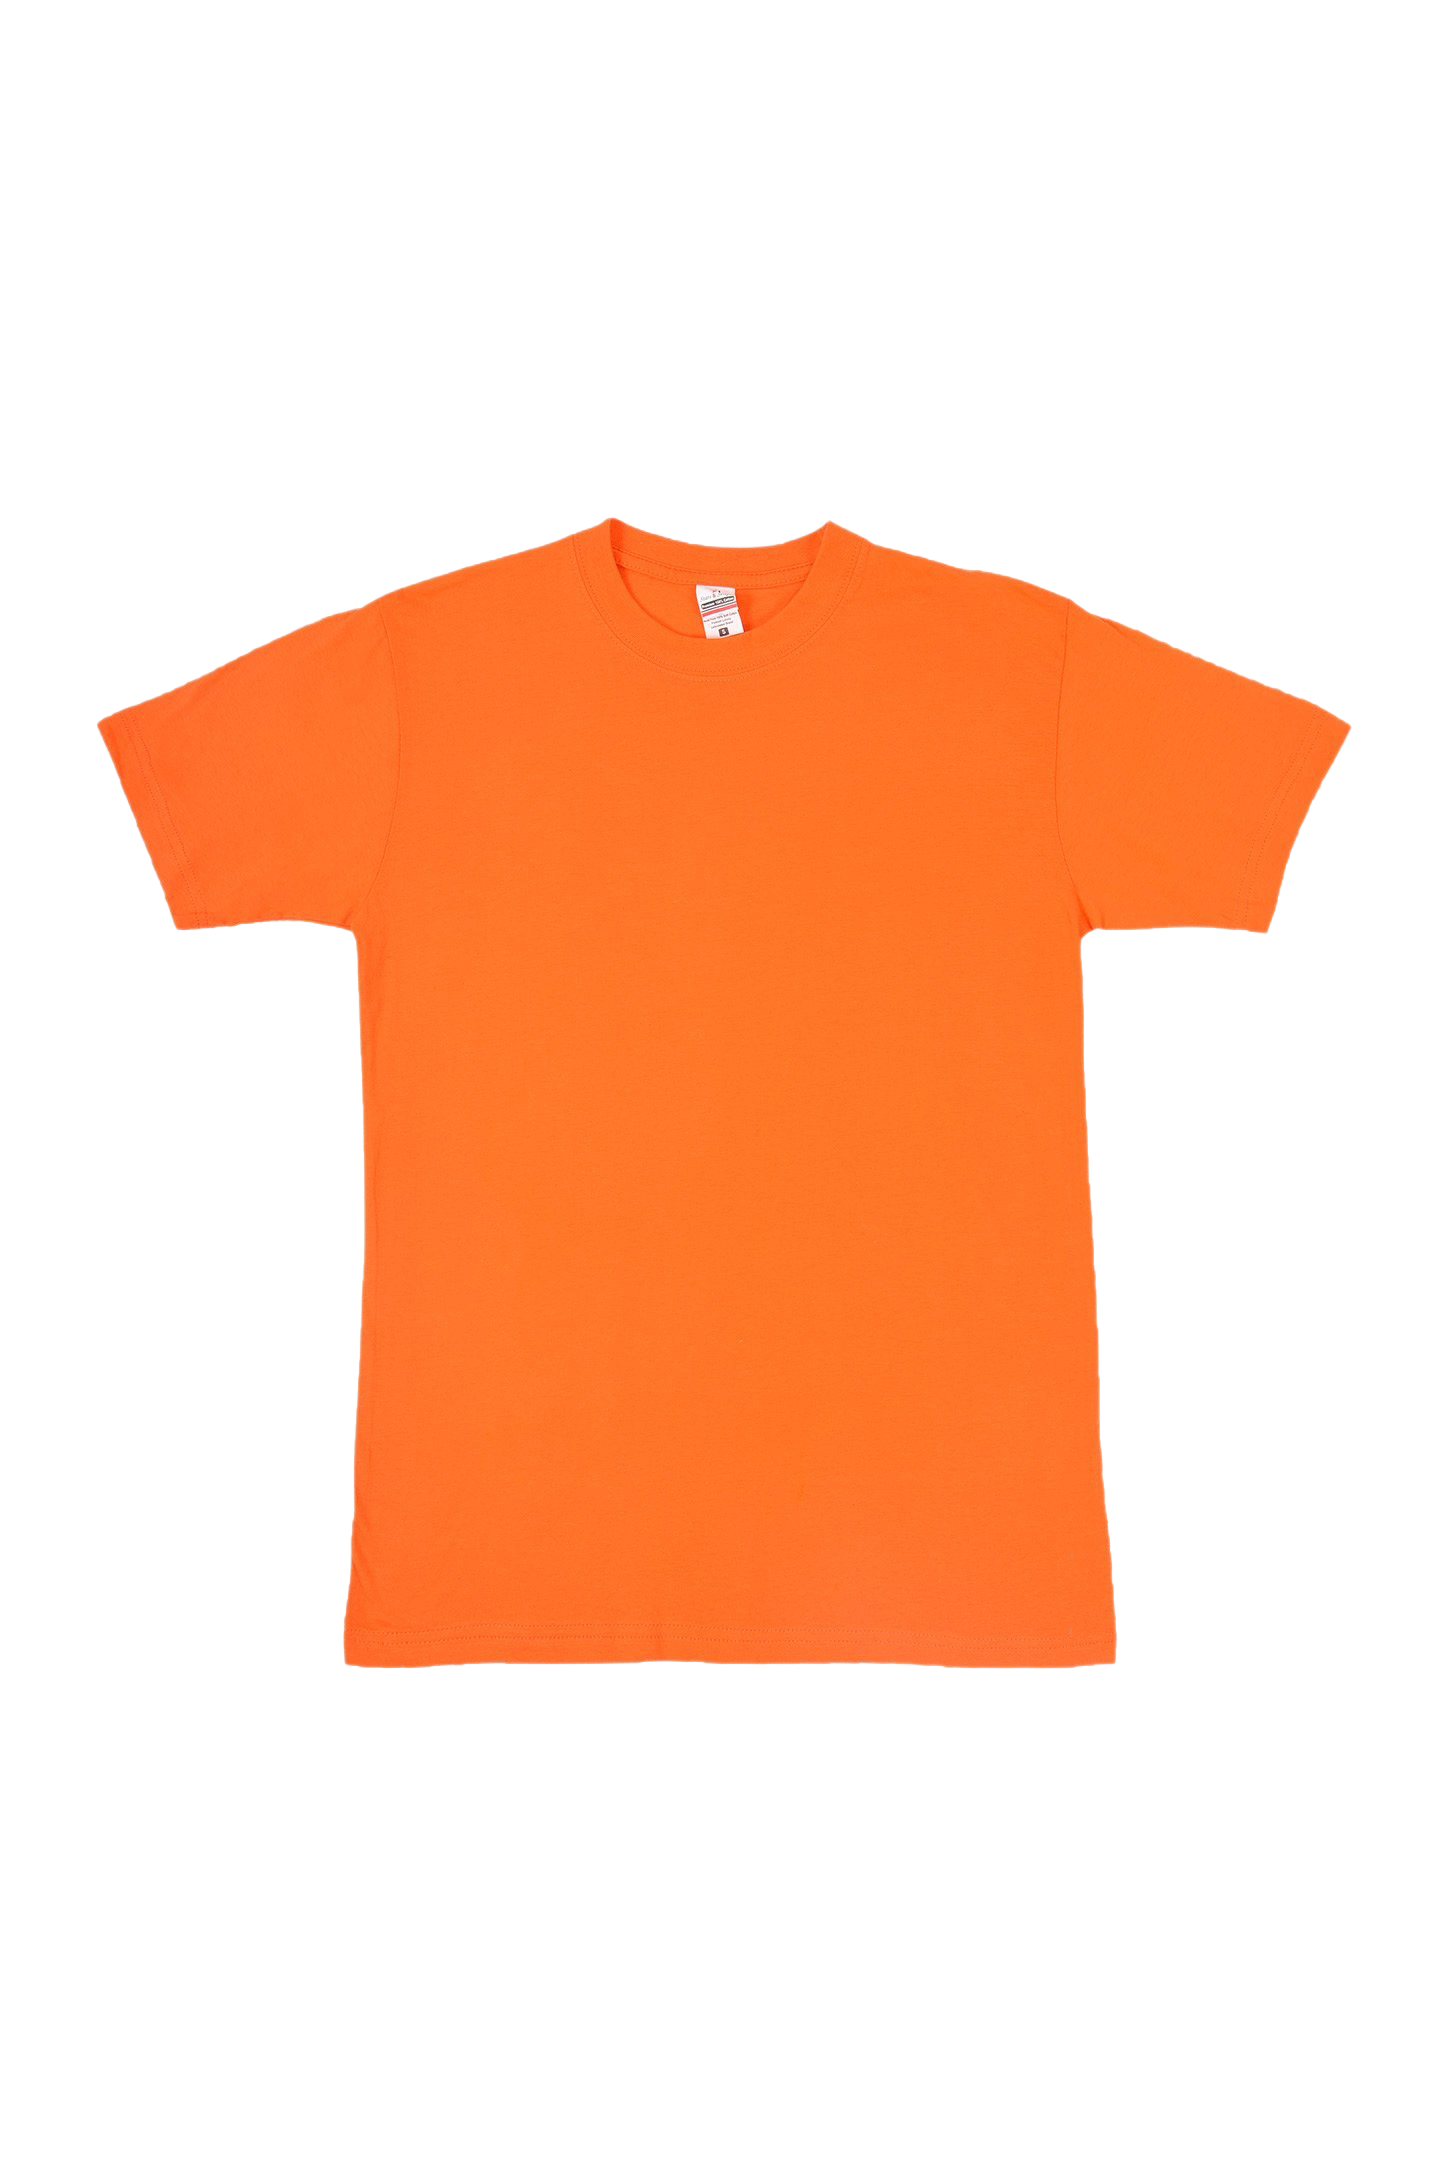 Plain Orange T-Shirt PNG Image | PNG Arts